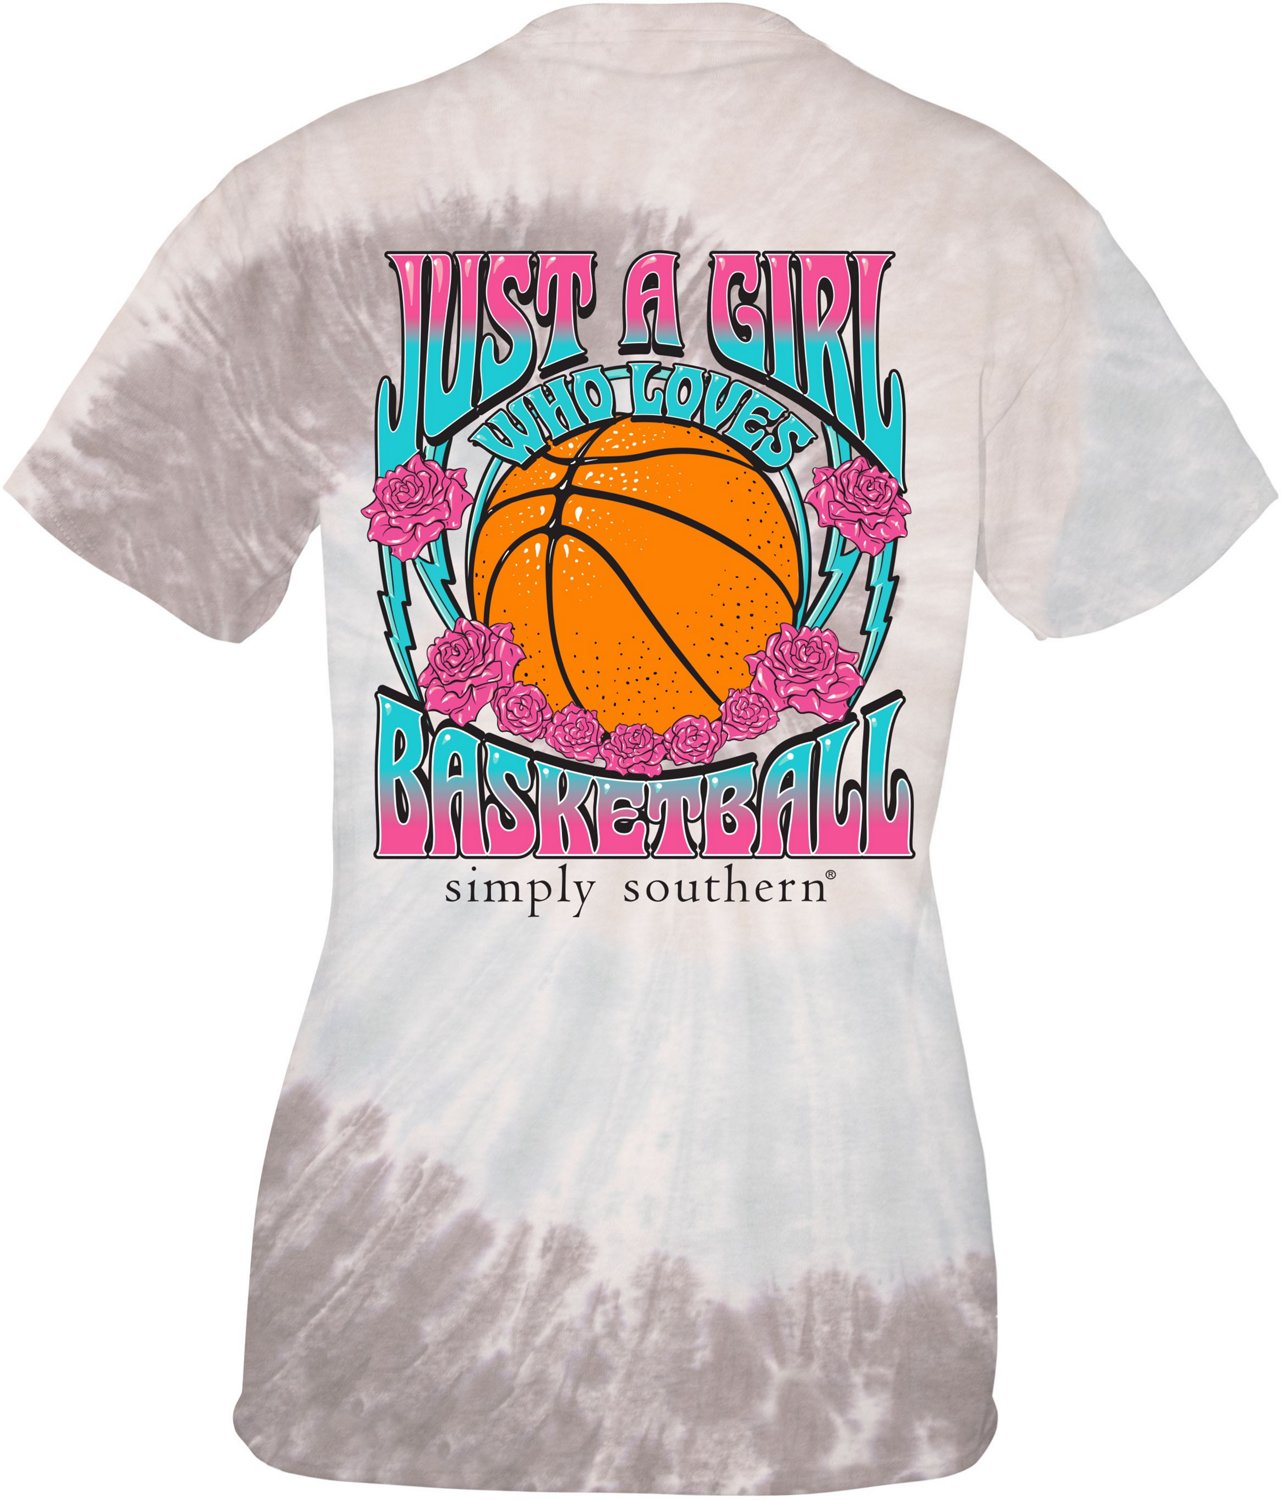 Simply Southern Women's Basketball T-shirt